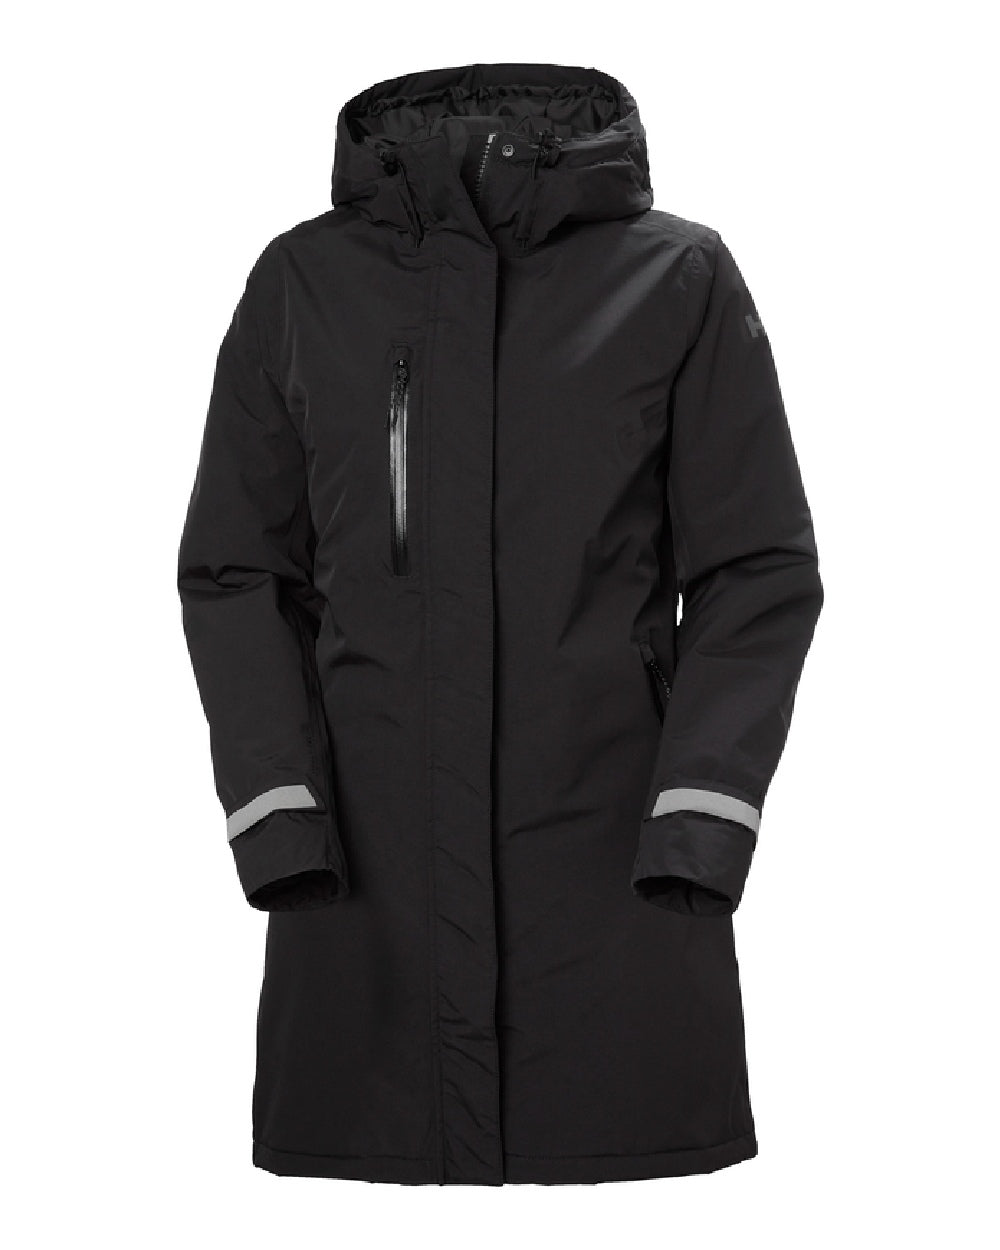 Helly Hansen Adore Ladies Insulated Rain Coat in Black 